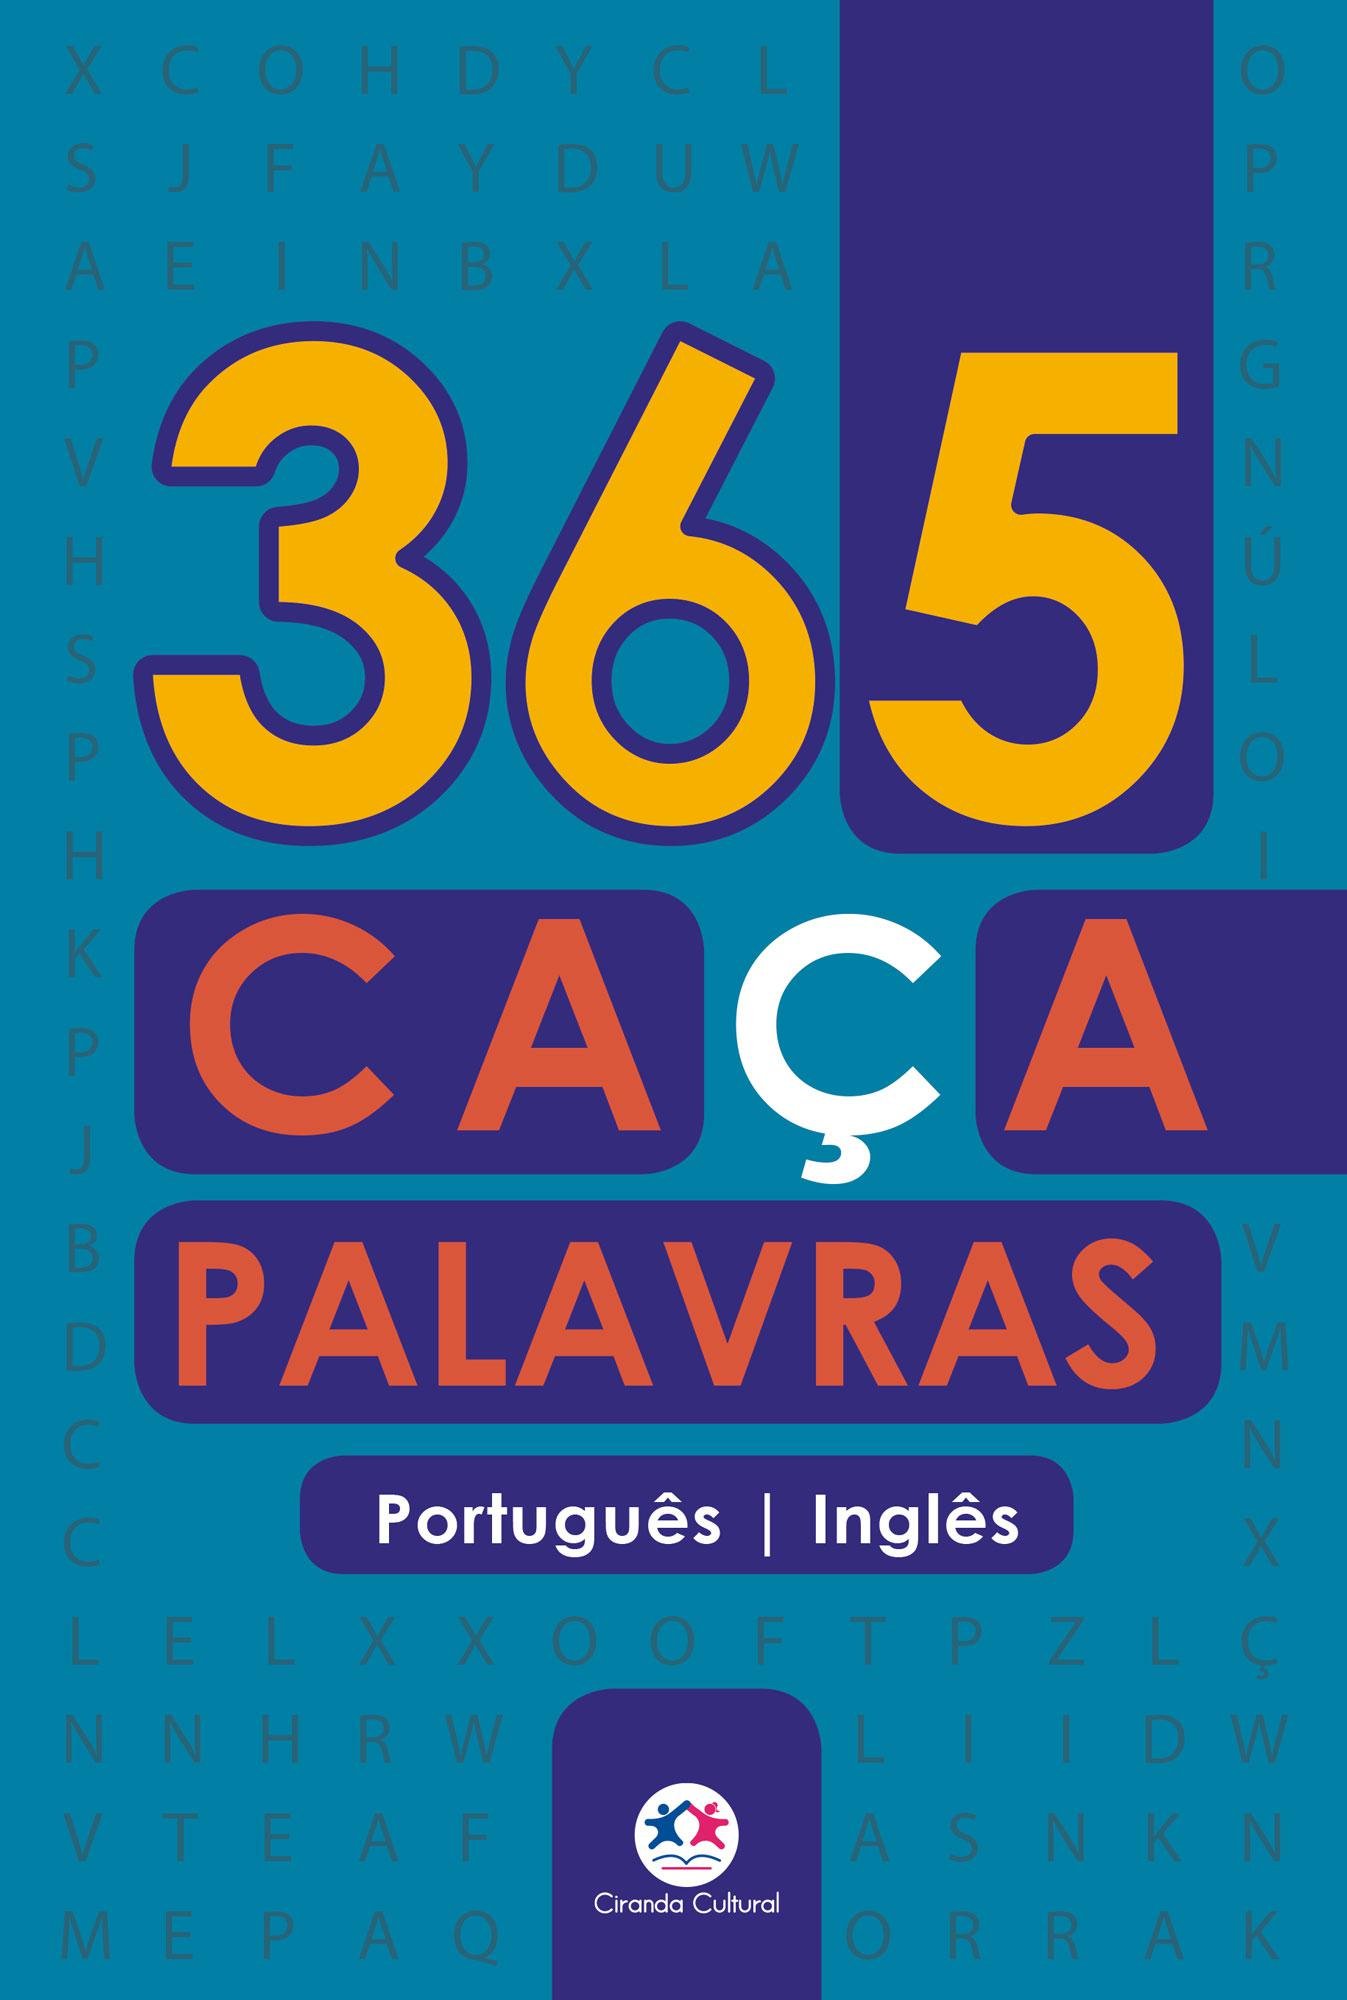 365 Caça-Palavras Português-Inglês - RioMar Aracaju Online